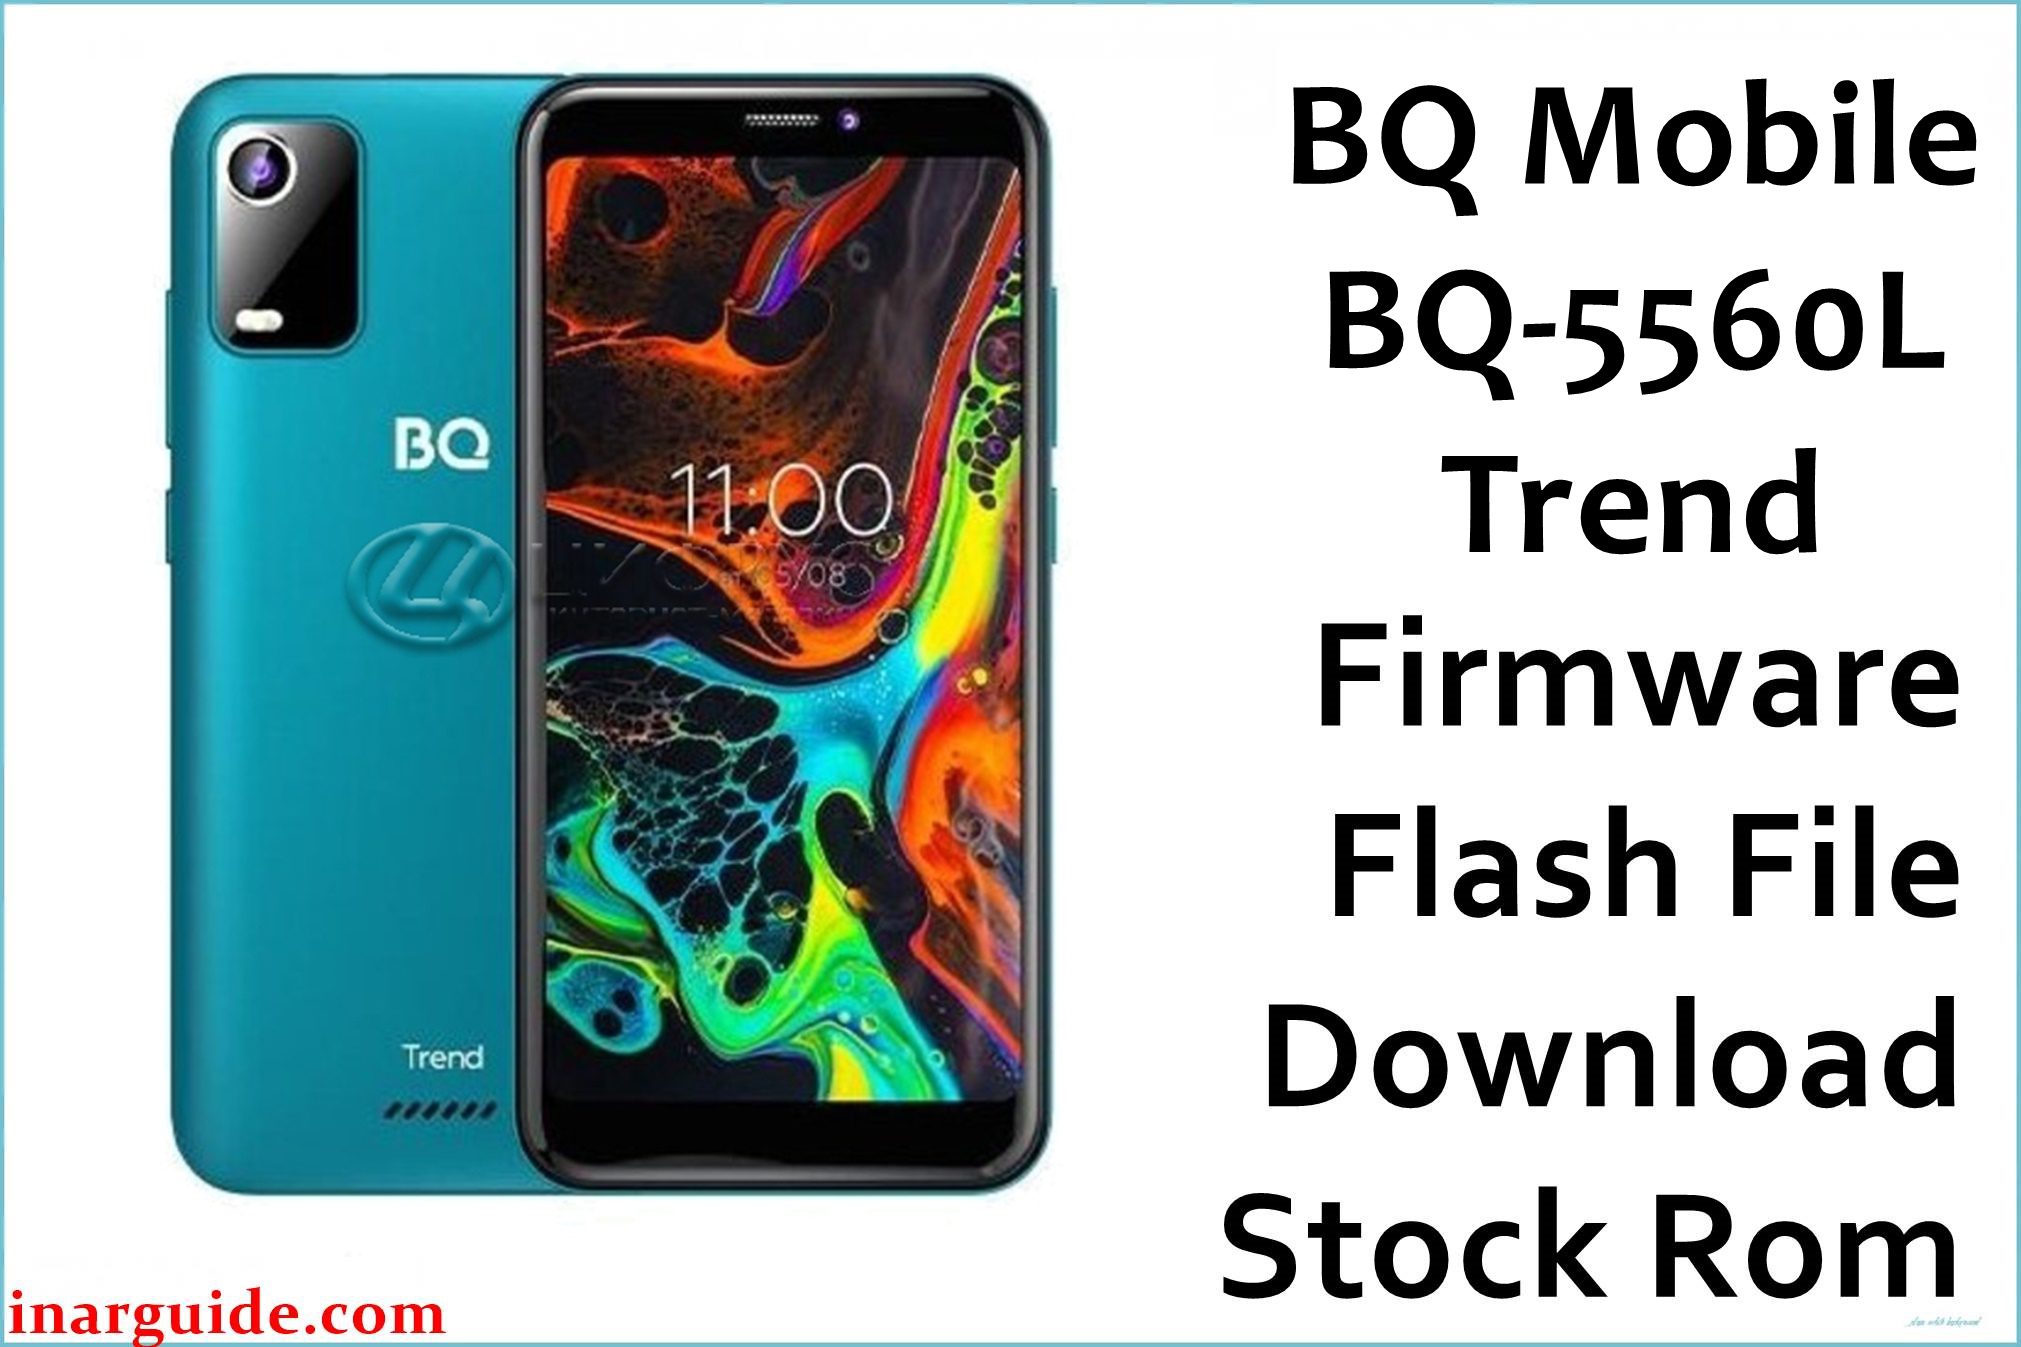 BQ Mobile BQ 5560L Trend